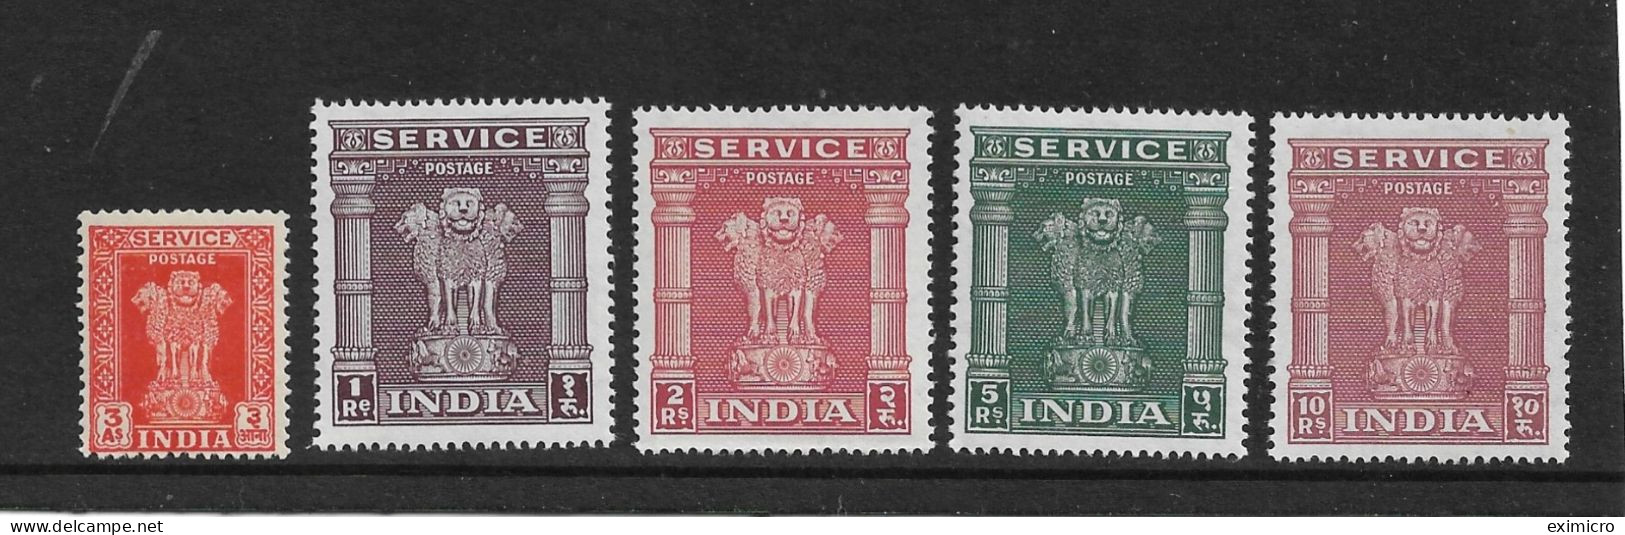 INDIA 1950 - 1951 OFFICIALS 3a, 1R - 10R SG O156, O161 - O164 UNMOUNTED MINT Cat £27.75 - Timbres De Service